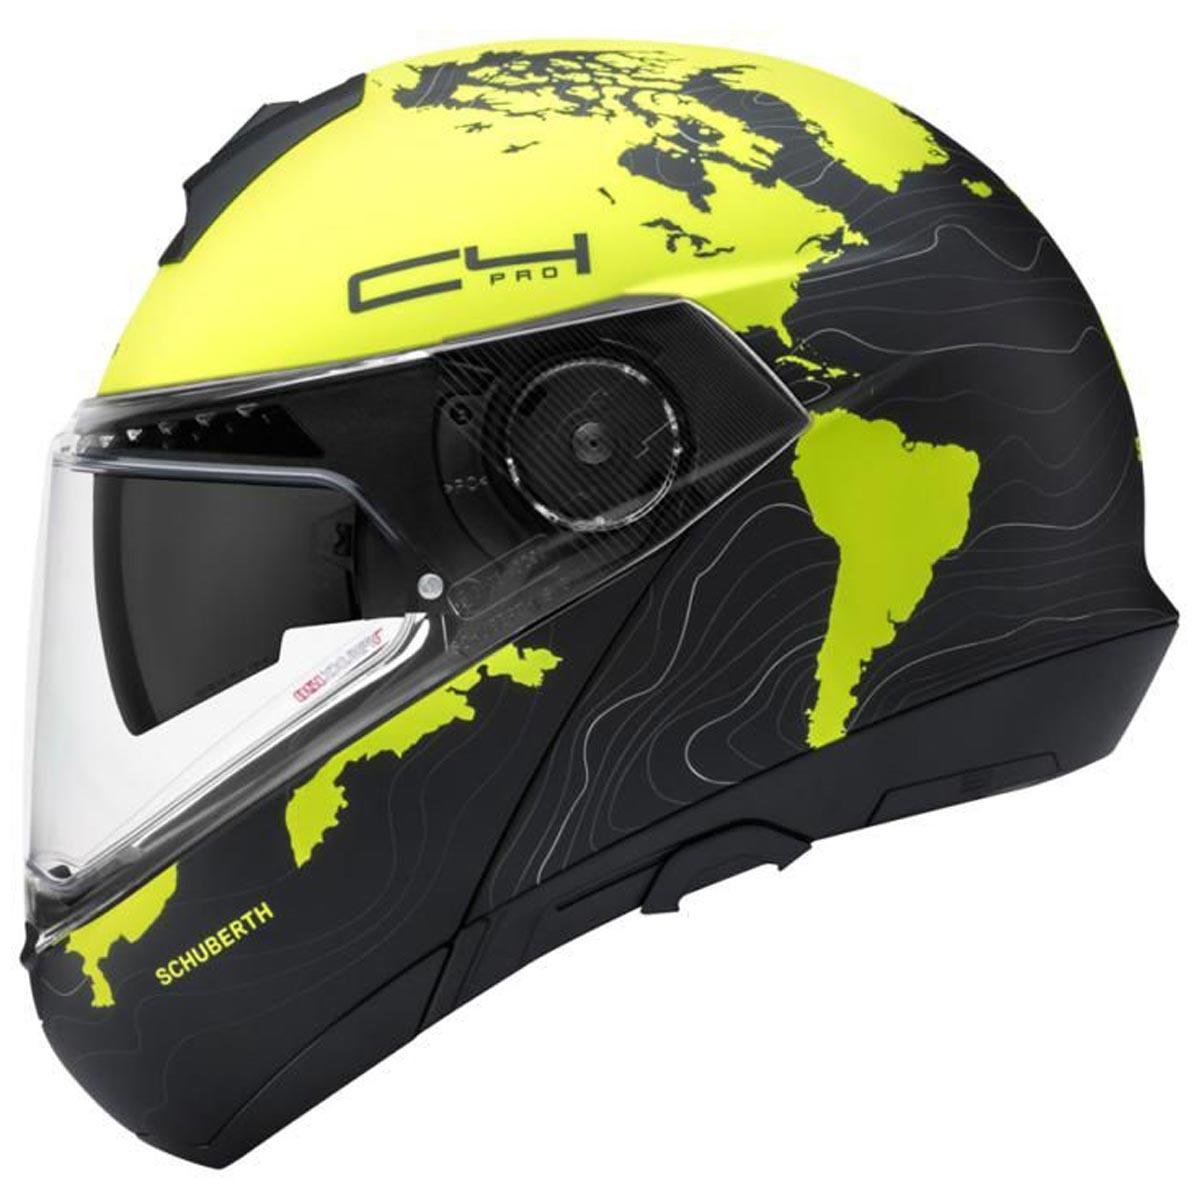 Schuberth C4 Pro Magnitudo Helmet - Yellow - getgearedshop